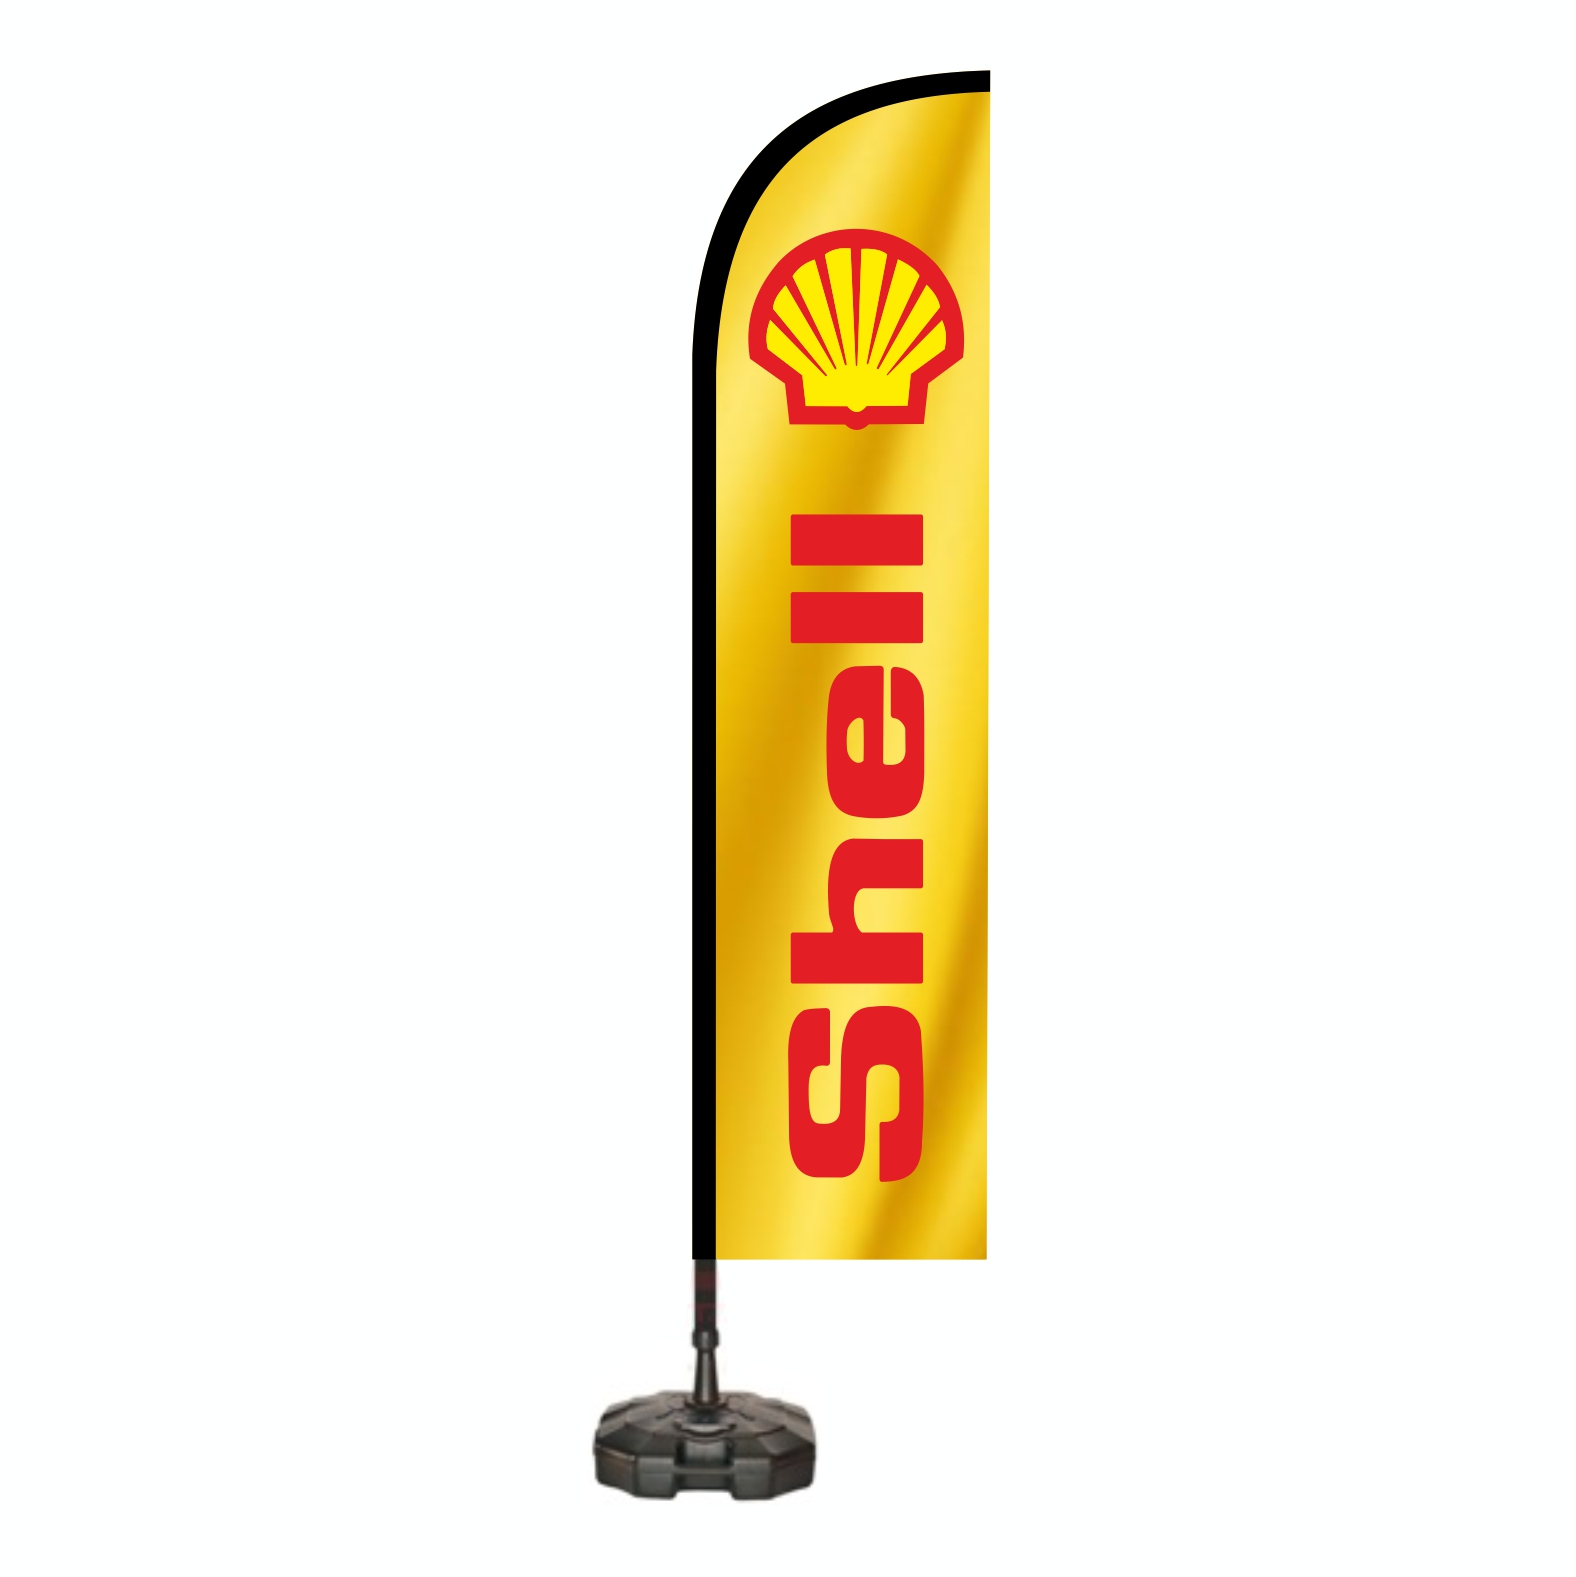 Shell Yol Bayraklar